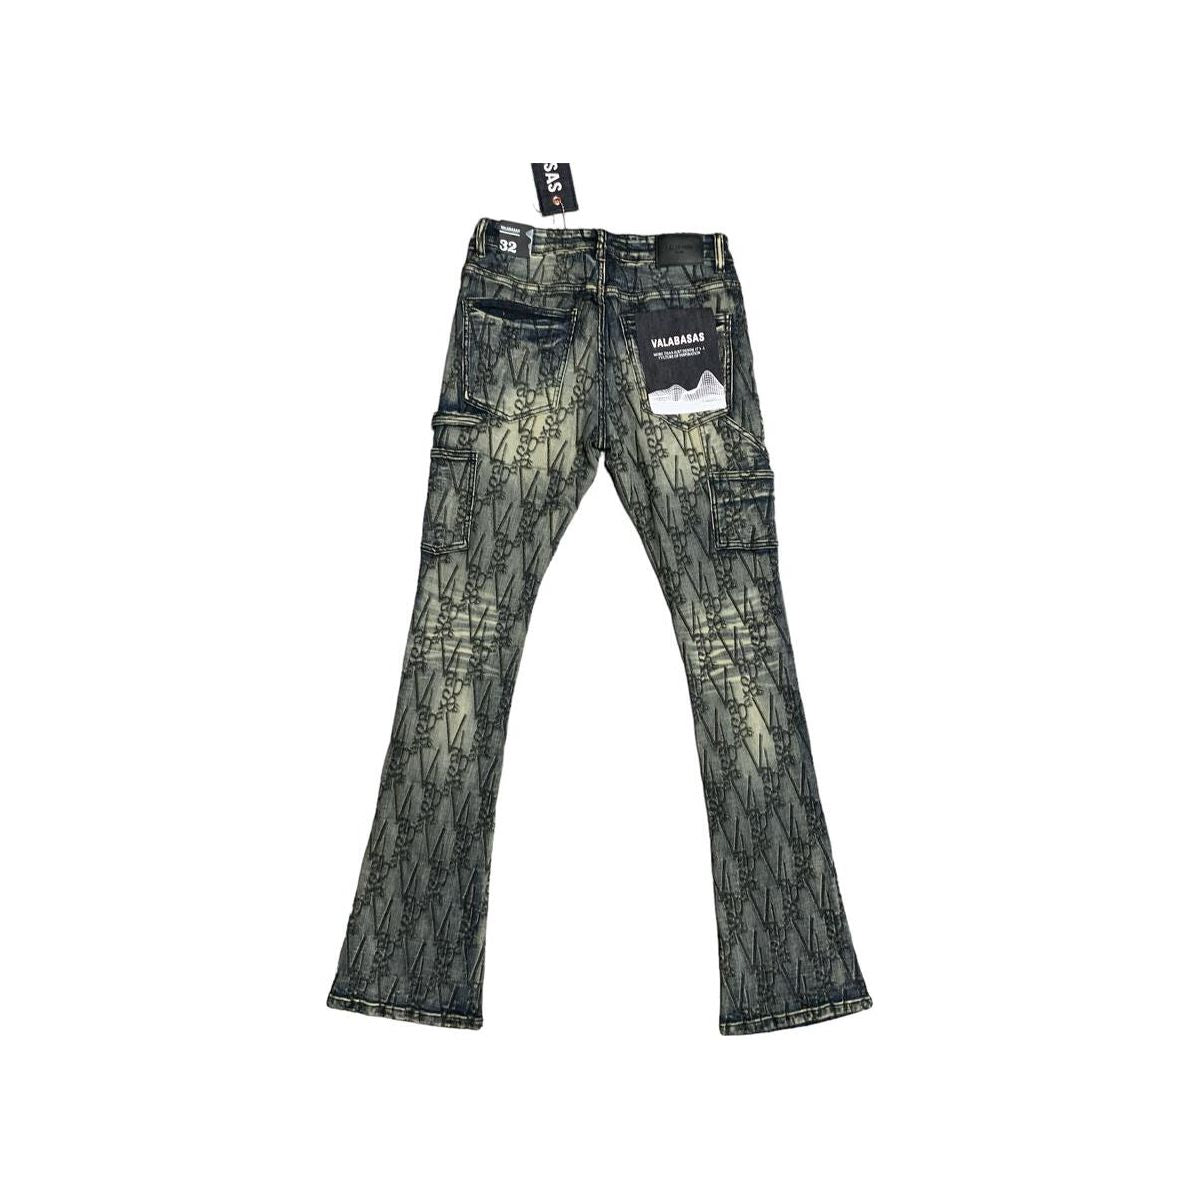 Valabasas "V-Scrawl" Black Blue Stacked Denim Jeans